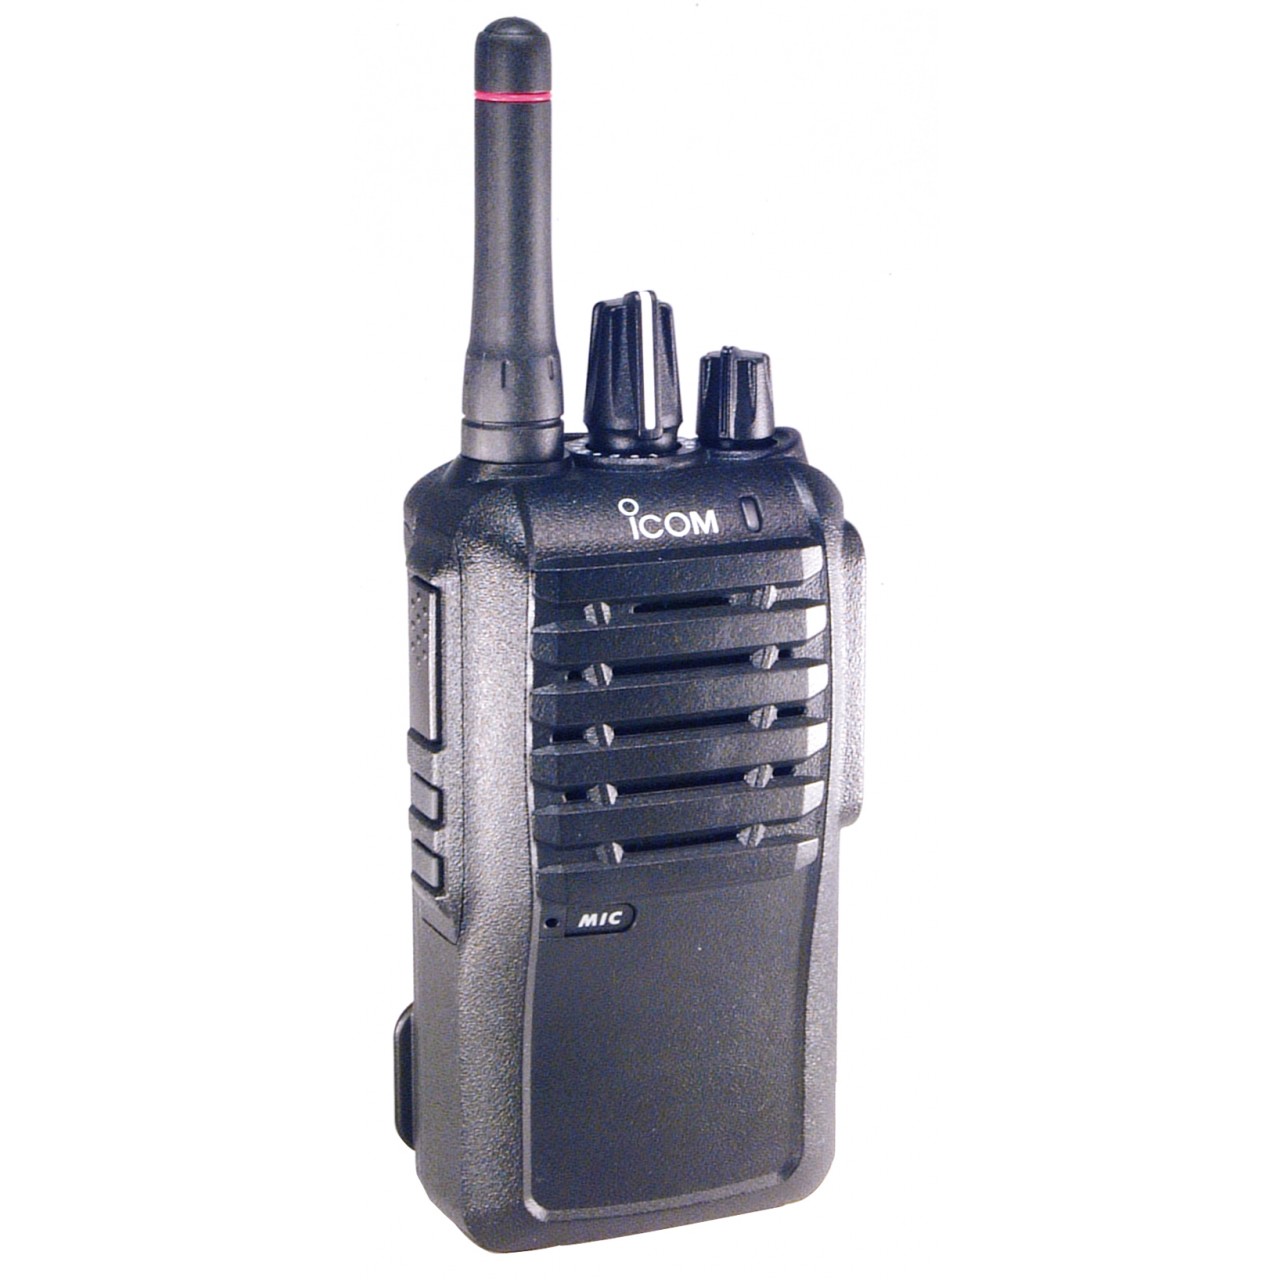 IC-F3002 Handhelds - ICOM